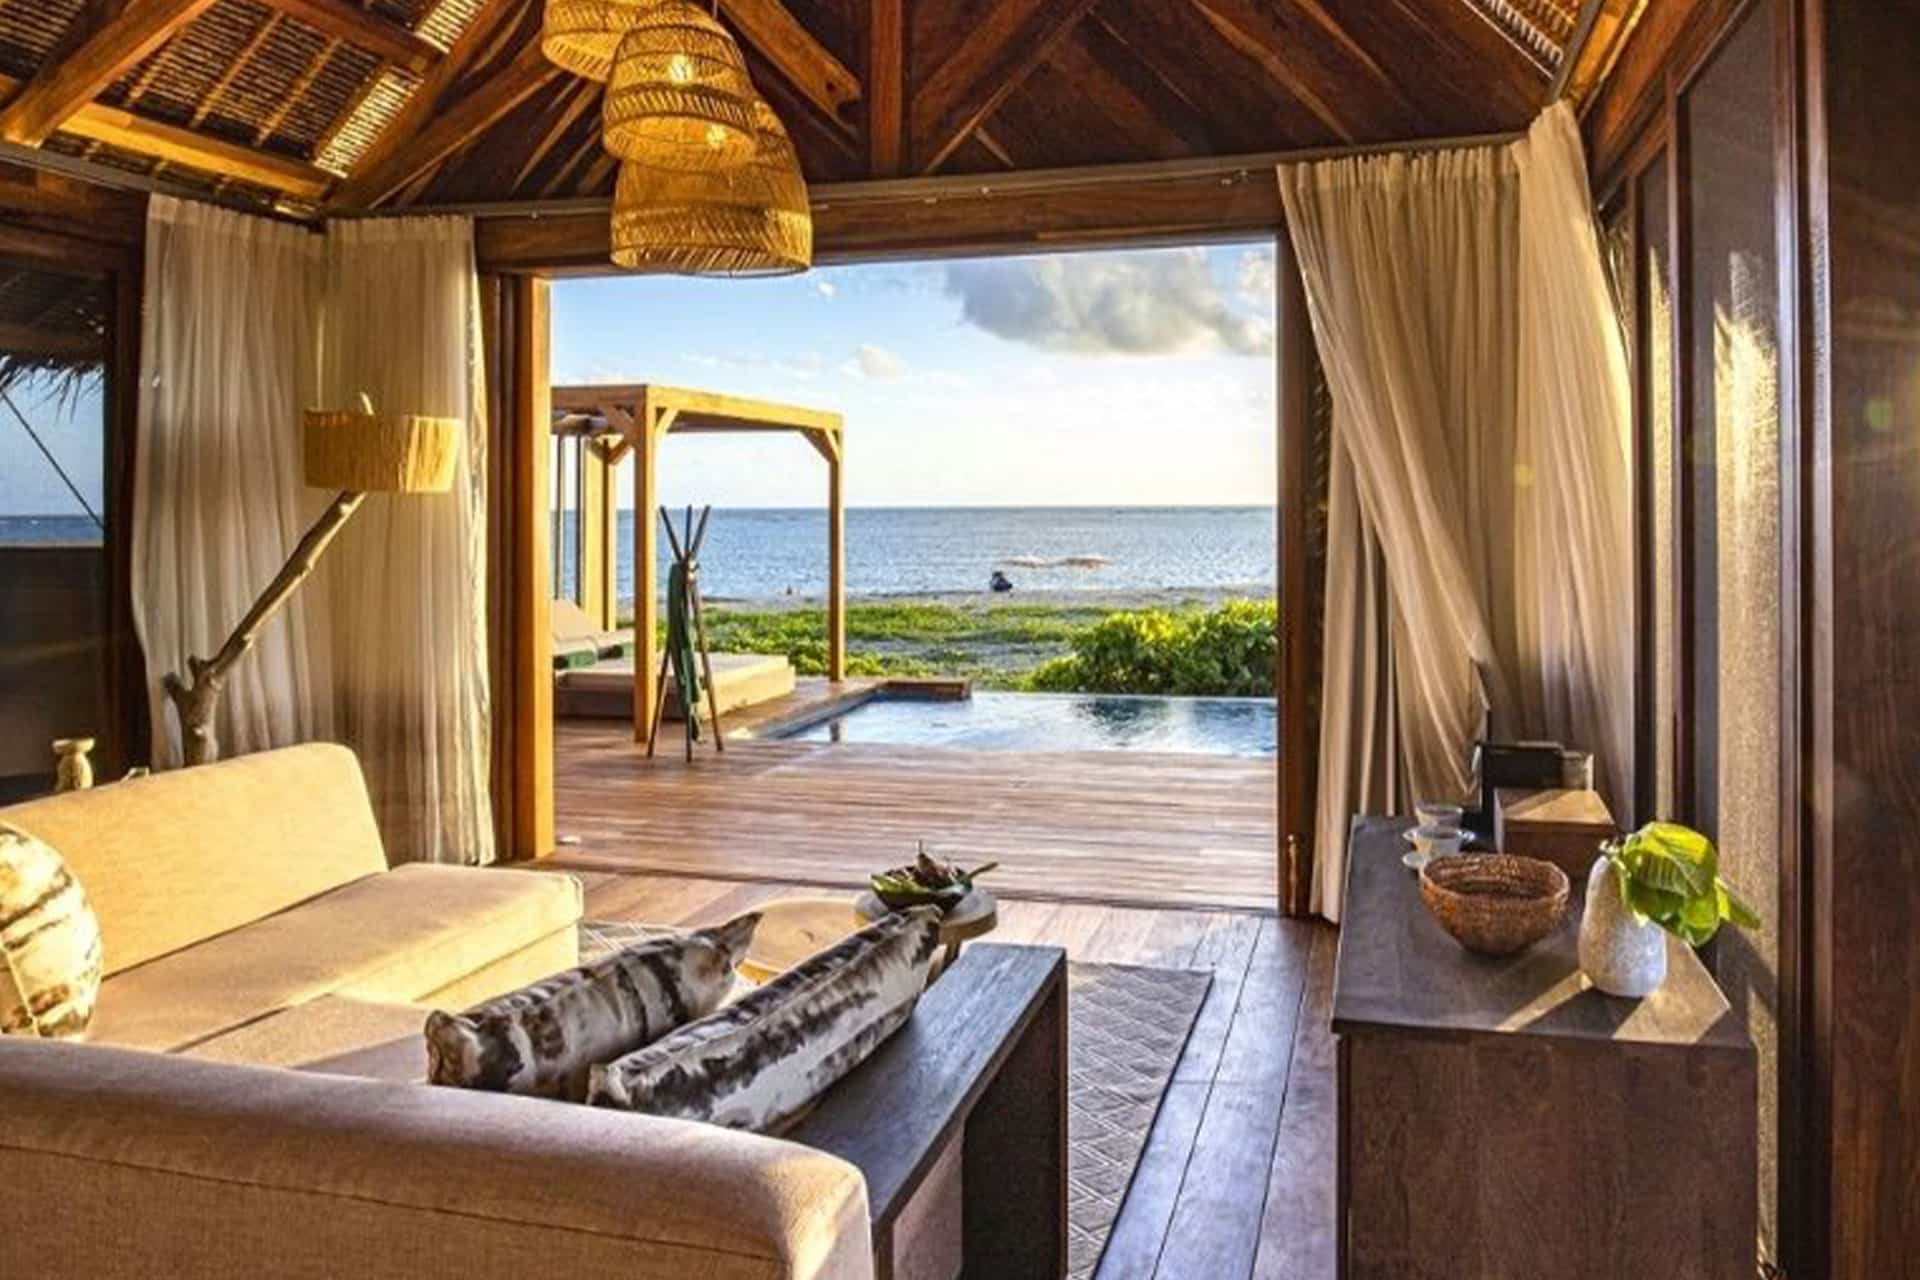 The view from a luxury beach villa at Banyan Tree Ilha Caldeira, Mozambique.